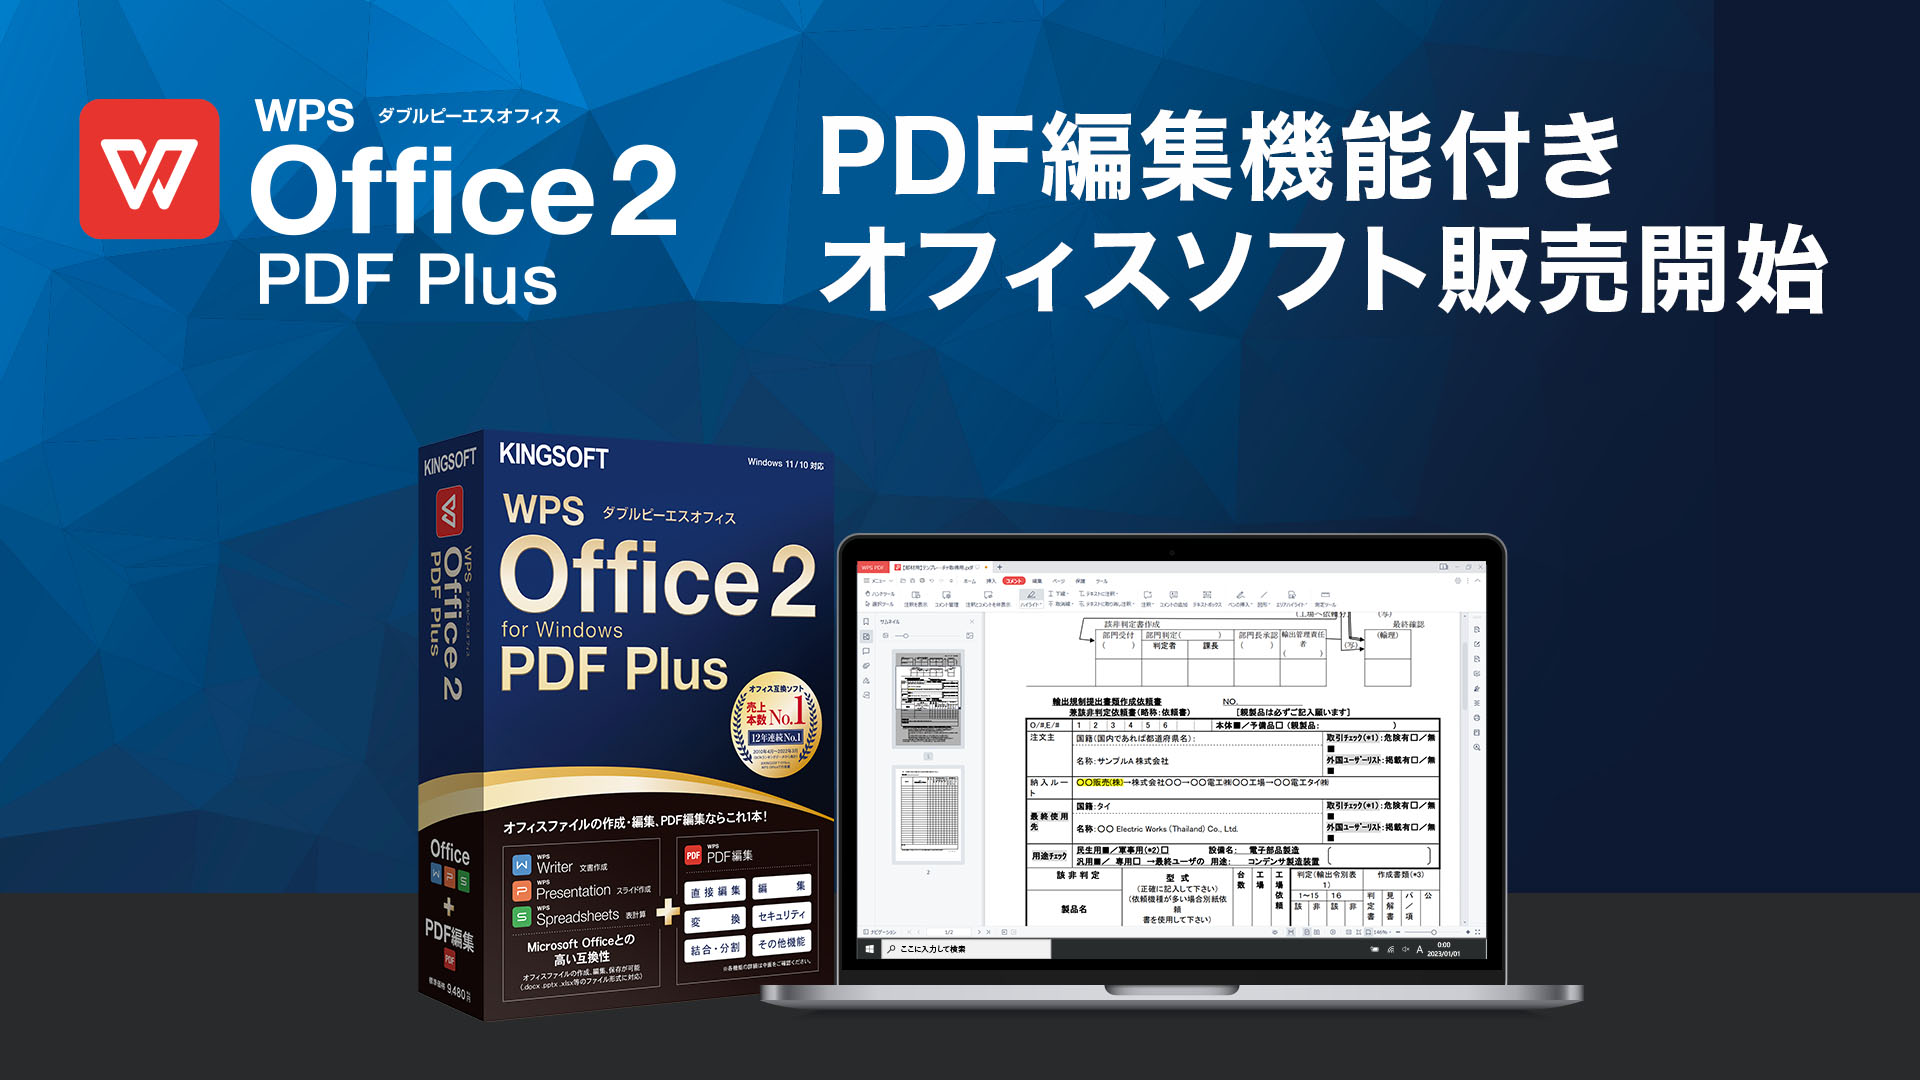 PDF編集機能付きオフィスソフト「WPS Office 2 PDF Plus」販売開始